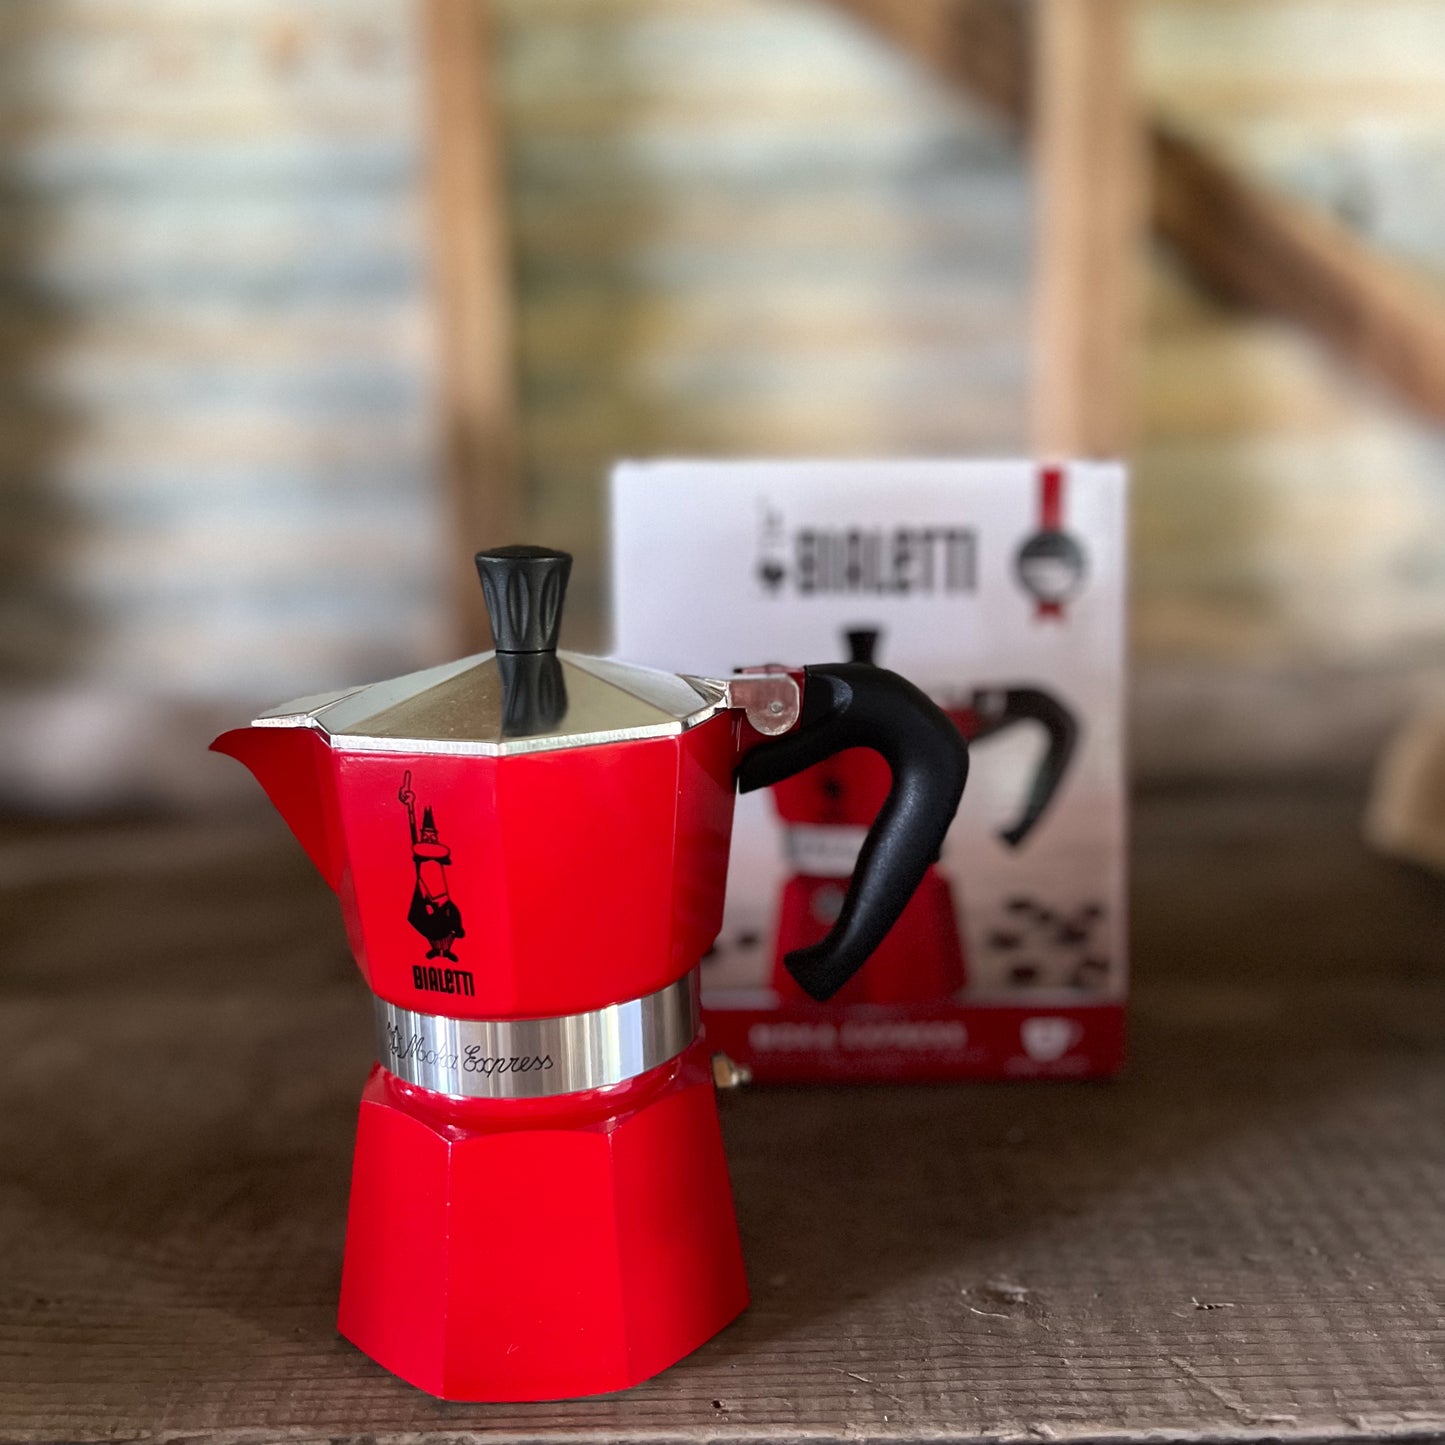 How to Use the Bialetti Mini Induction Moka Pot #coffee 